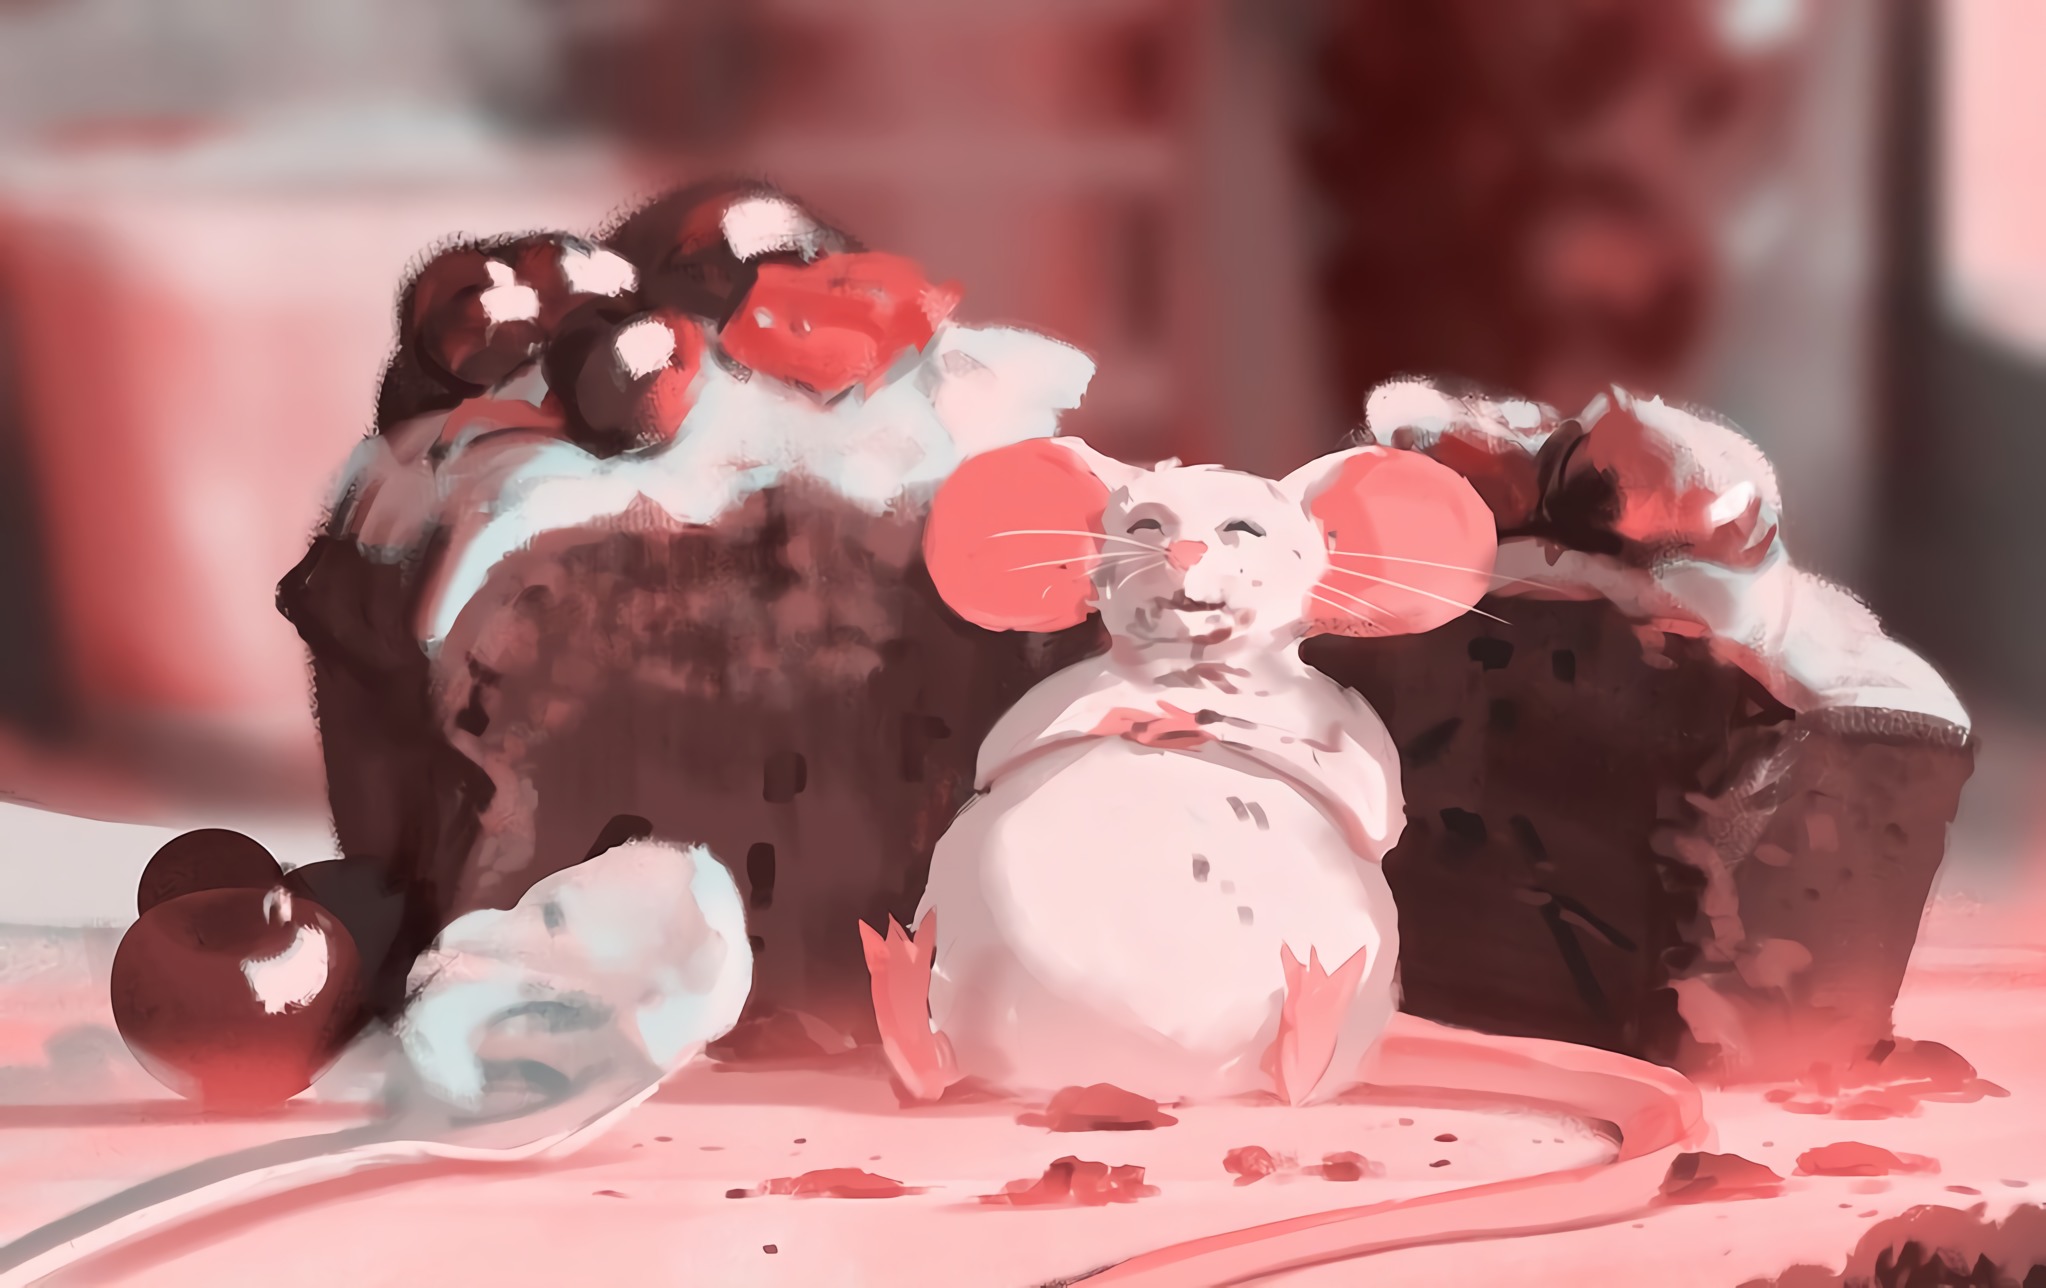 General 2046x1288 digital art artwork mice mouse ears stuffed animal animals cake food Atey Ghailan cherries